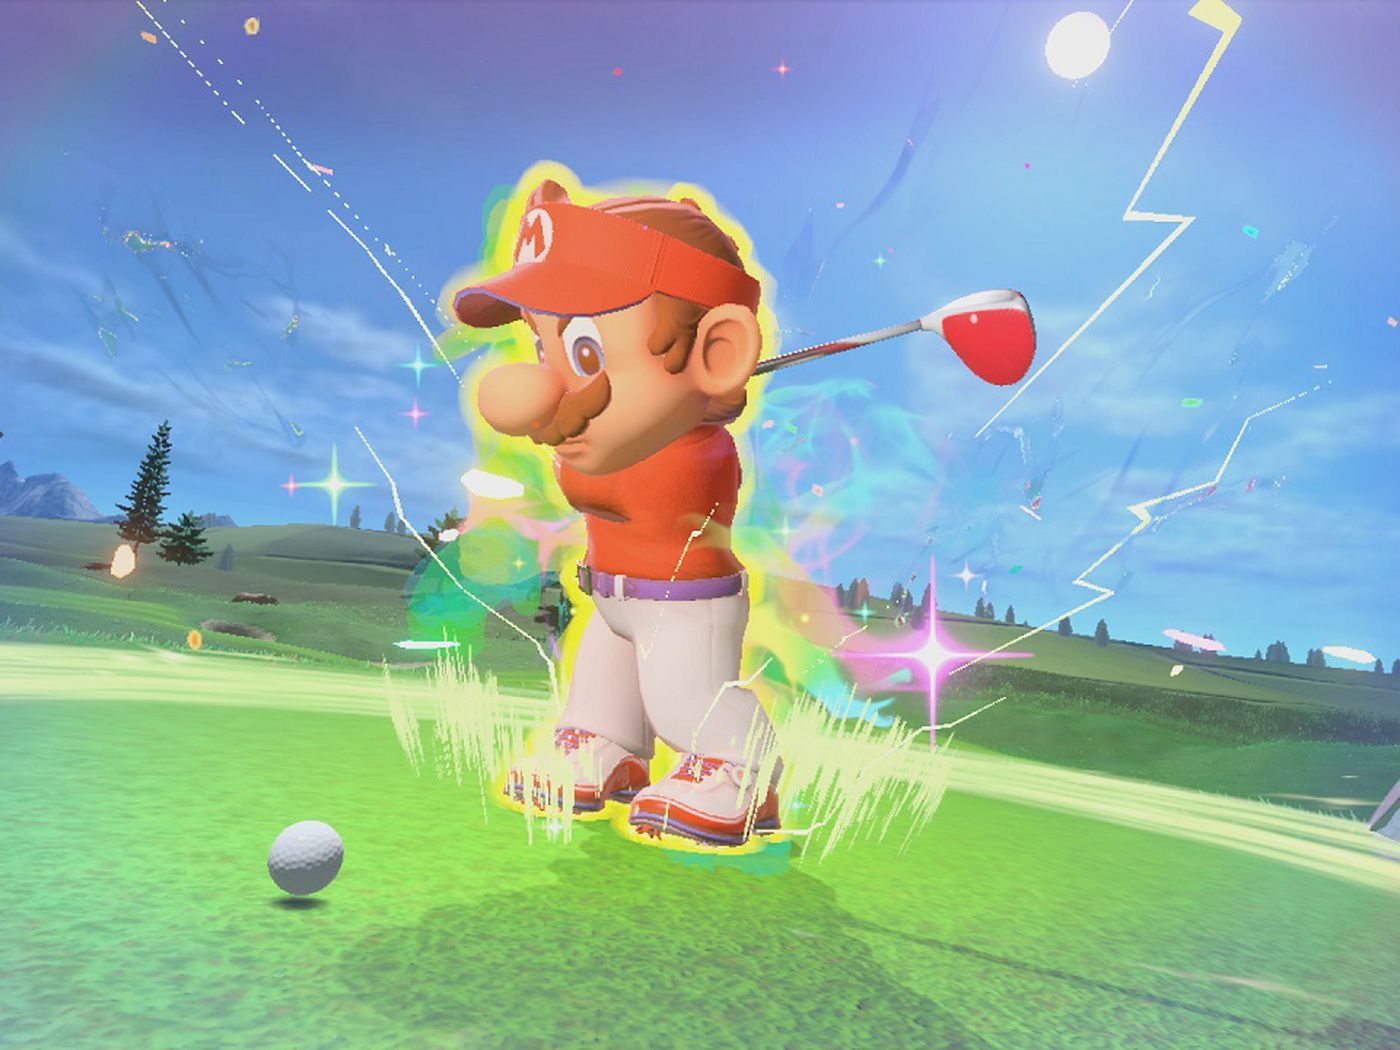 Mario Golf: Super Rush launches June 25 on Nintendo Switch